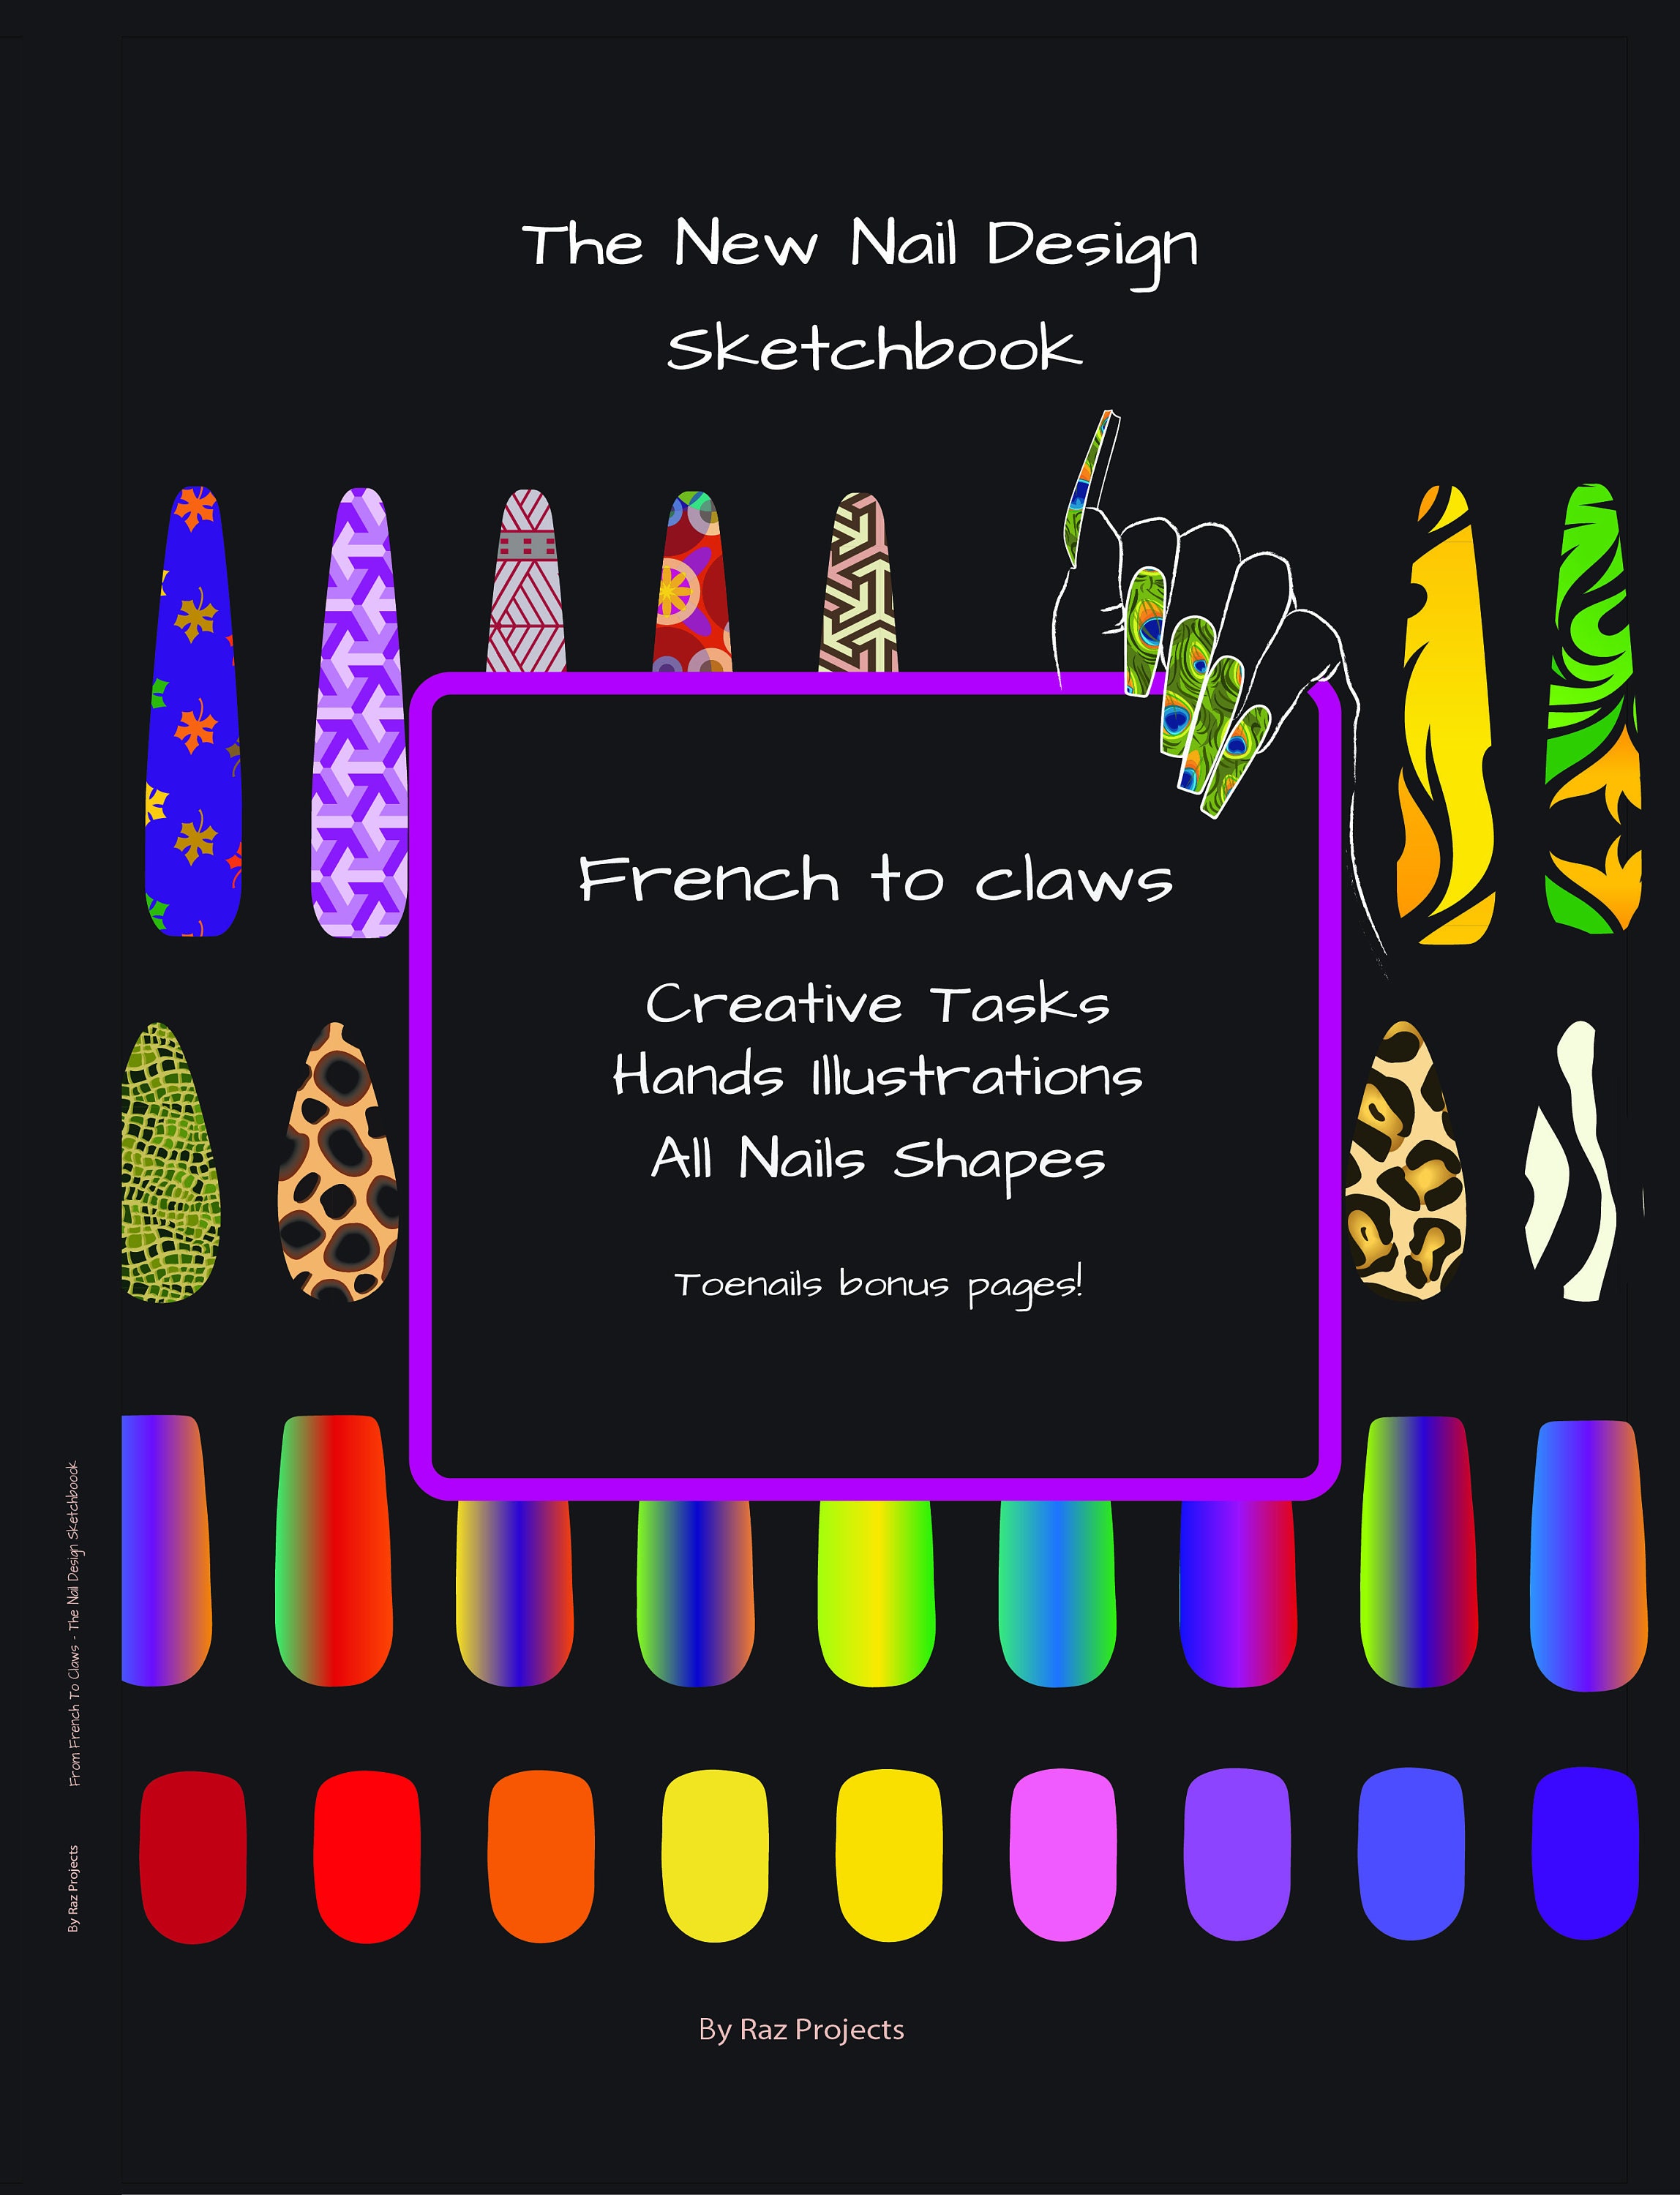 NAIL ART SKETCHBOOK: Sketchbook to practice the art of blank nails